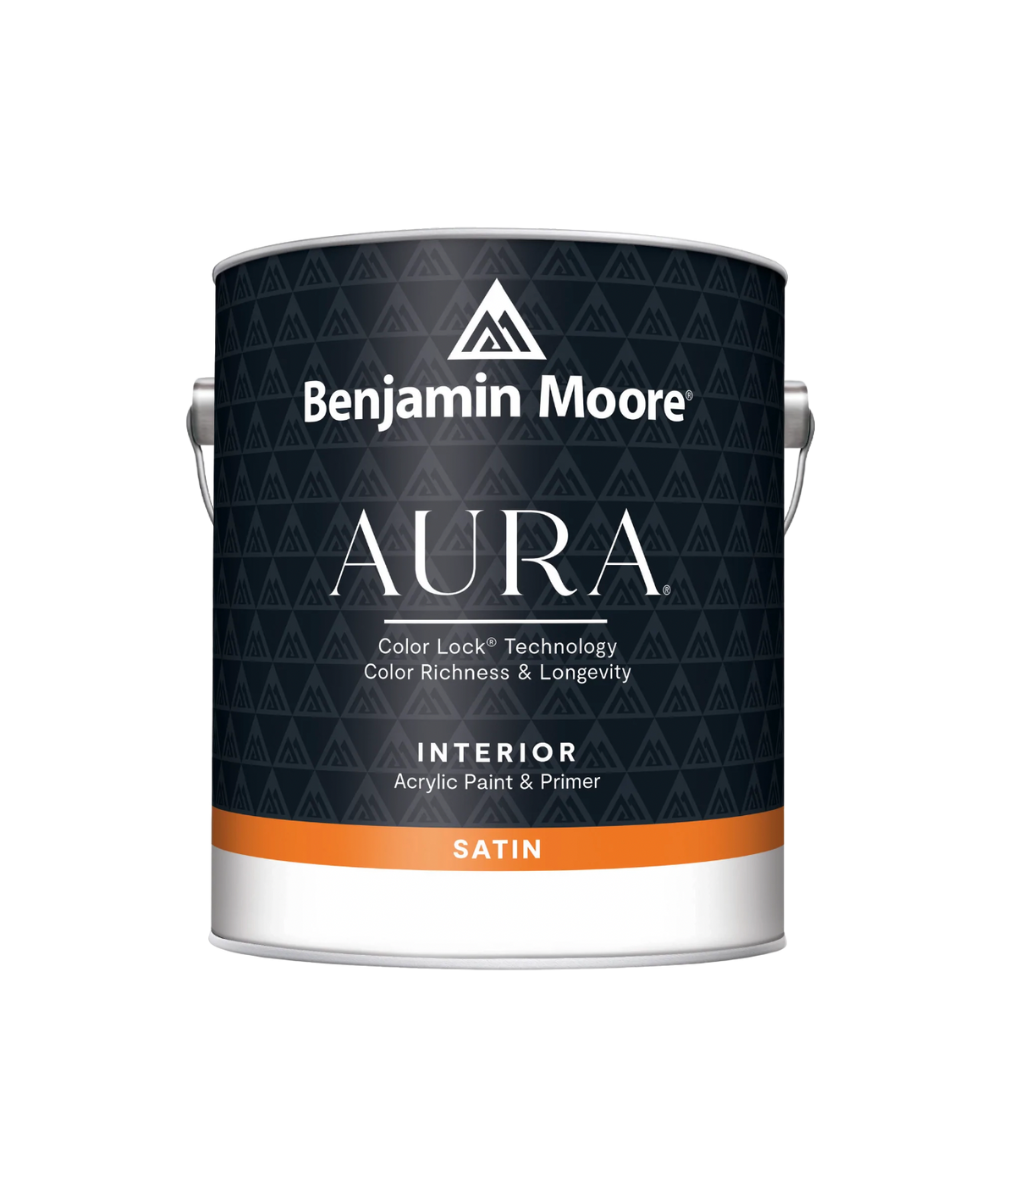 Benjamin Moore Aura Satin Interior Paint, available at JC Licht.